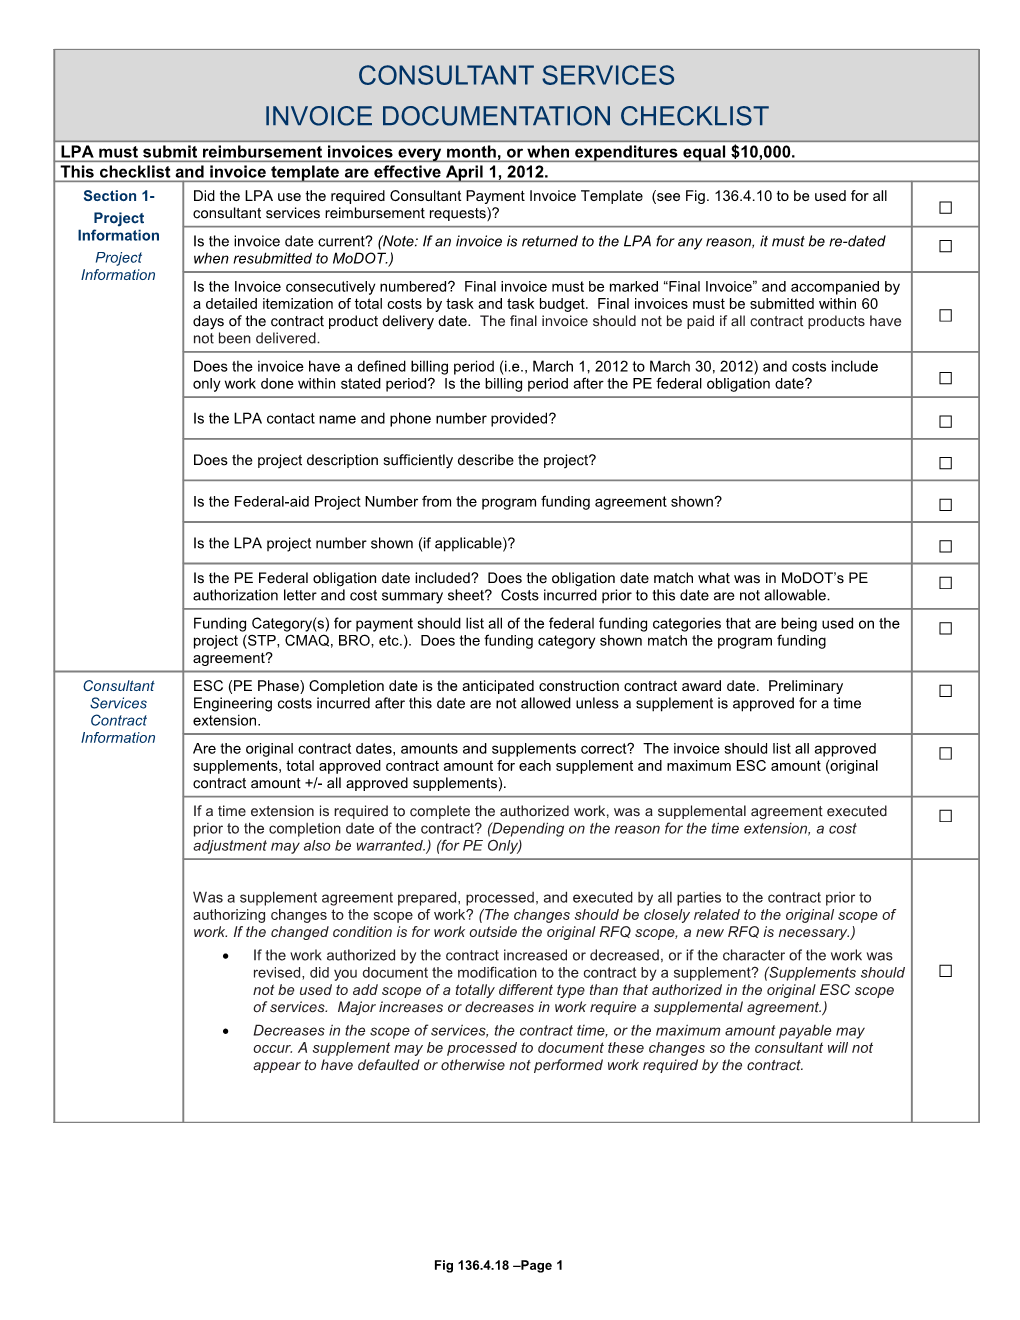 LPA Consultant Services Payment Invoice Checklist